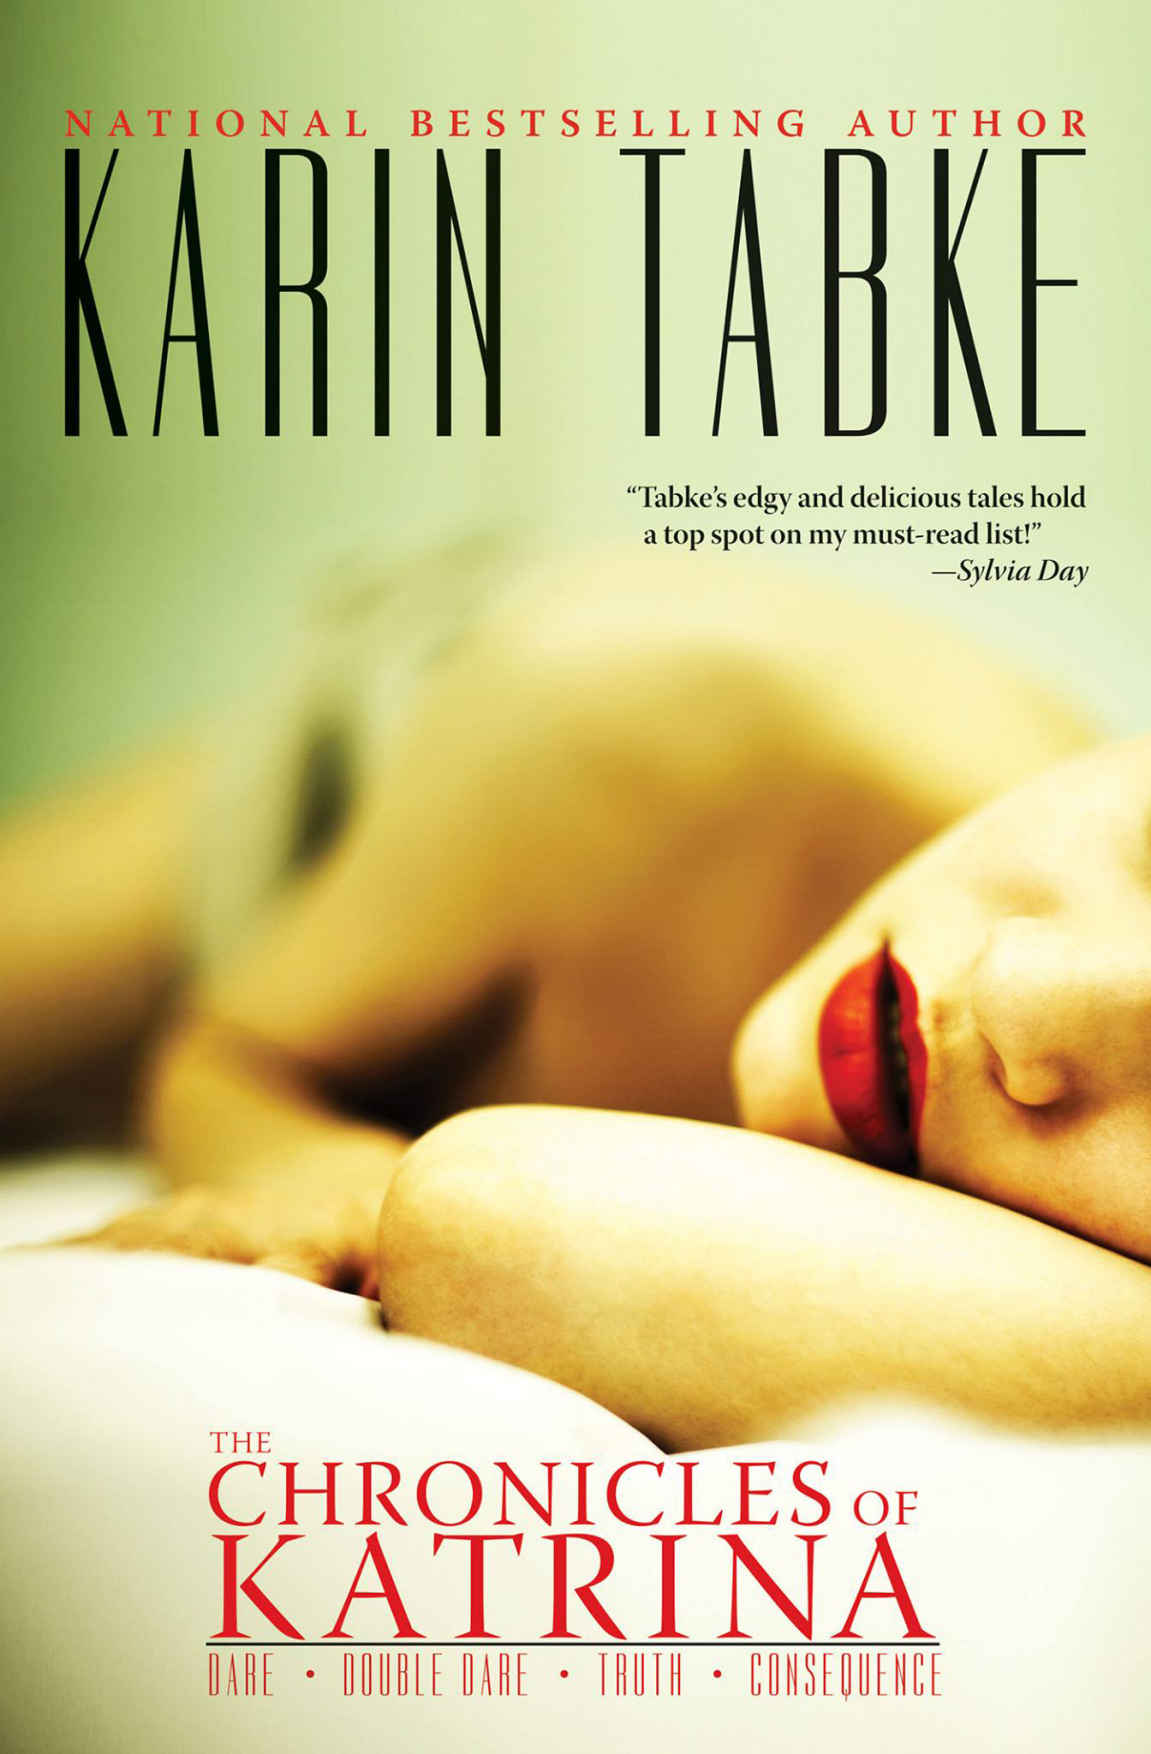 The Chronicles of Katrina by Karin Tabke